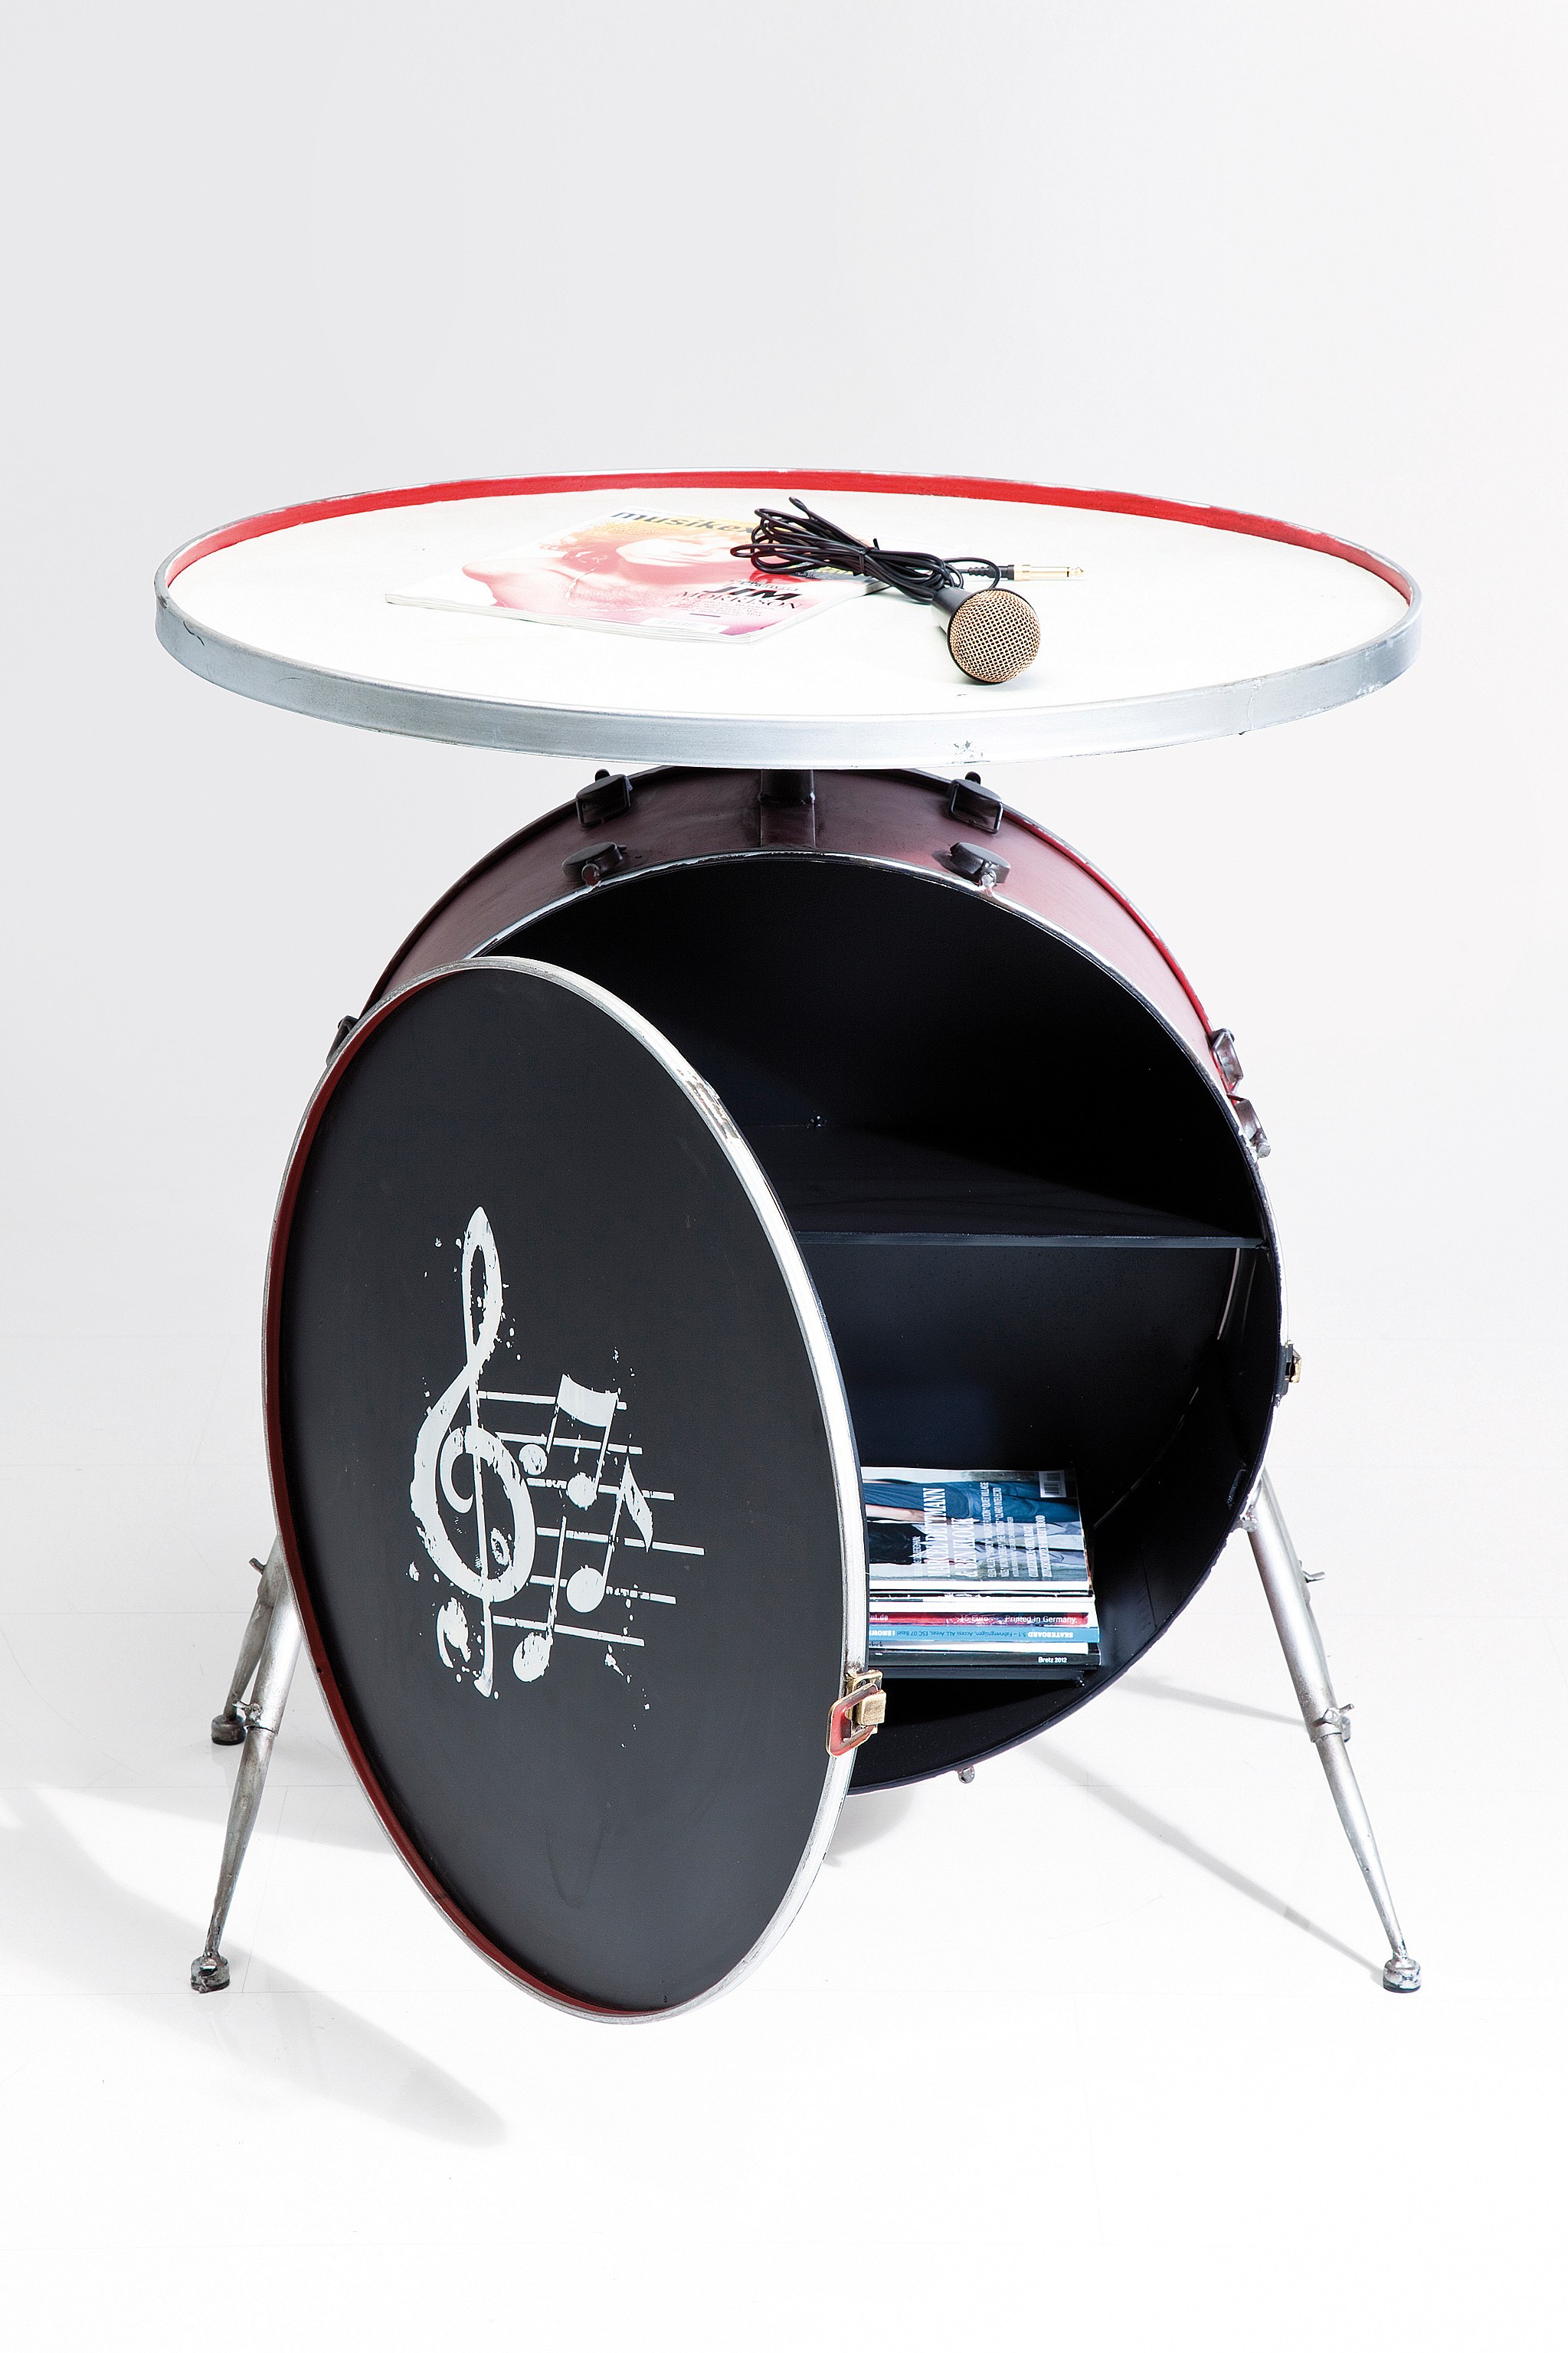 drum coffee table design photo - 6